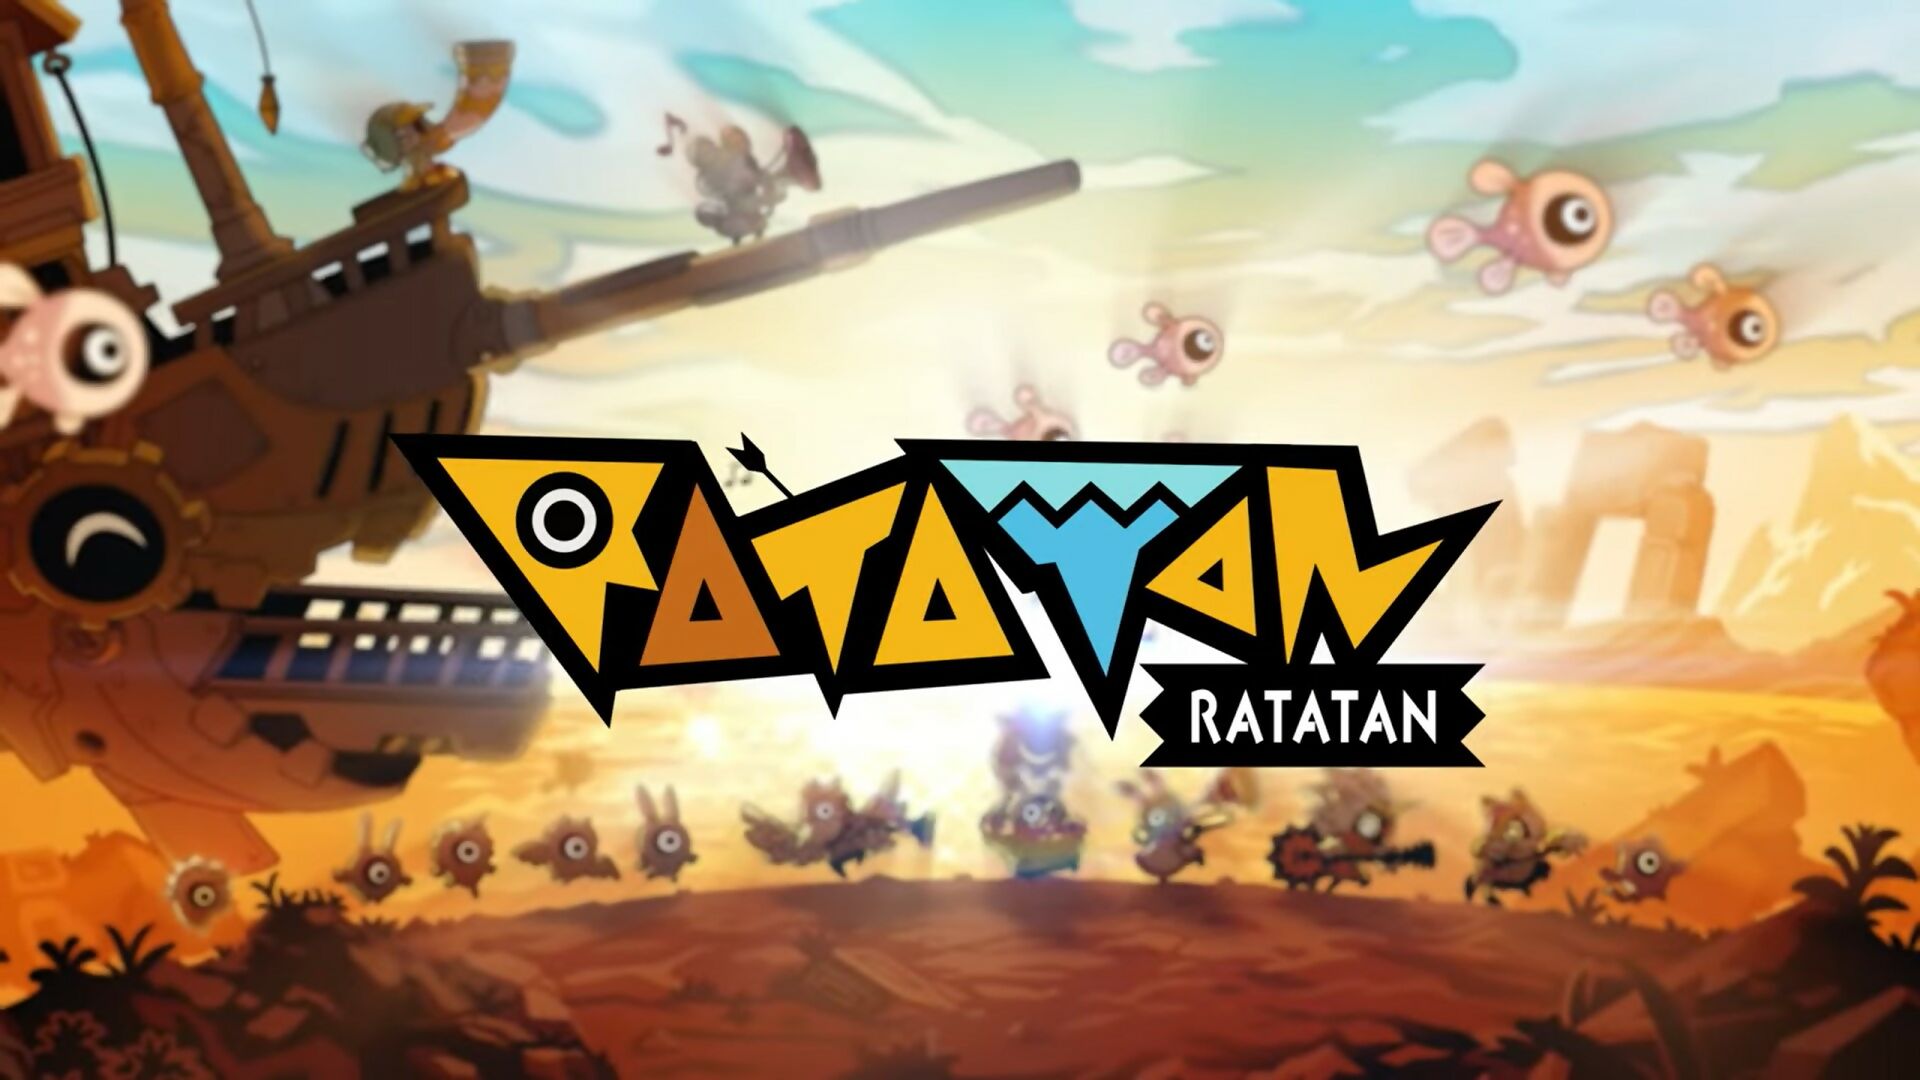 Ratatan é anunciado, novo jogo dos desenvolvedores de Patapon